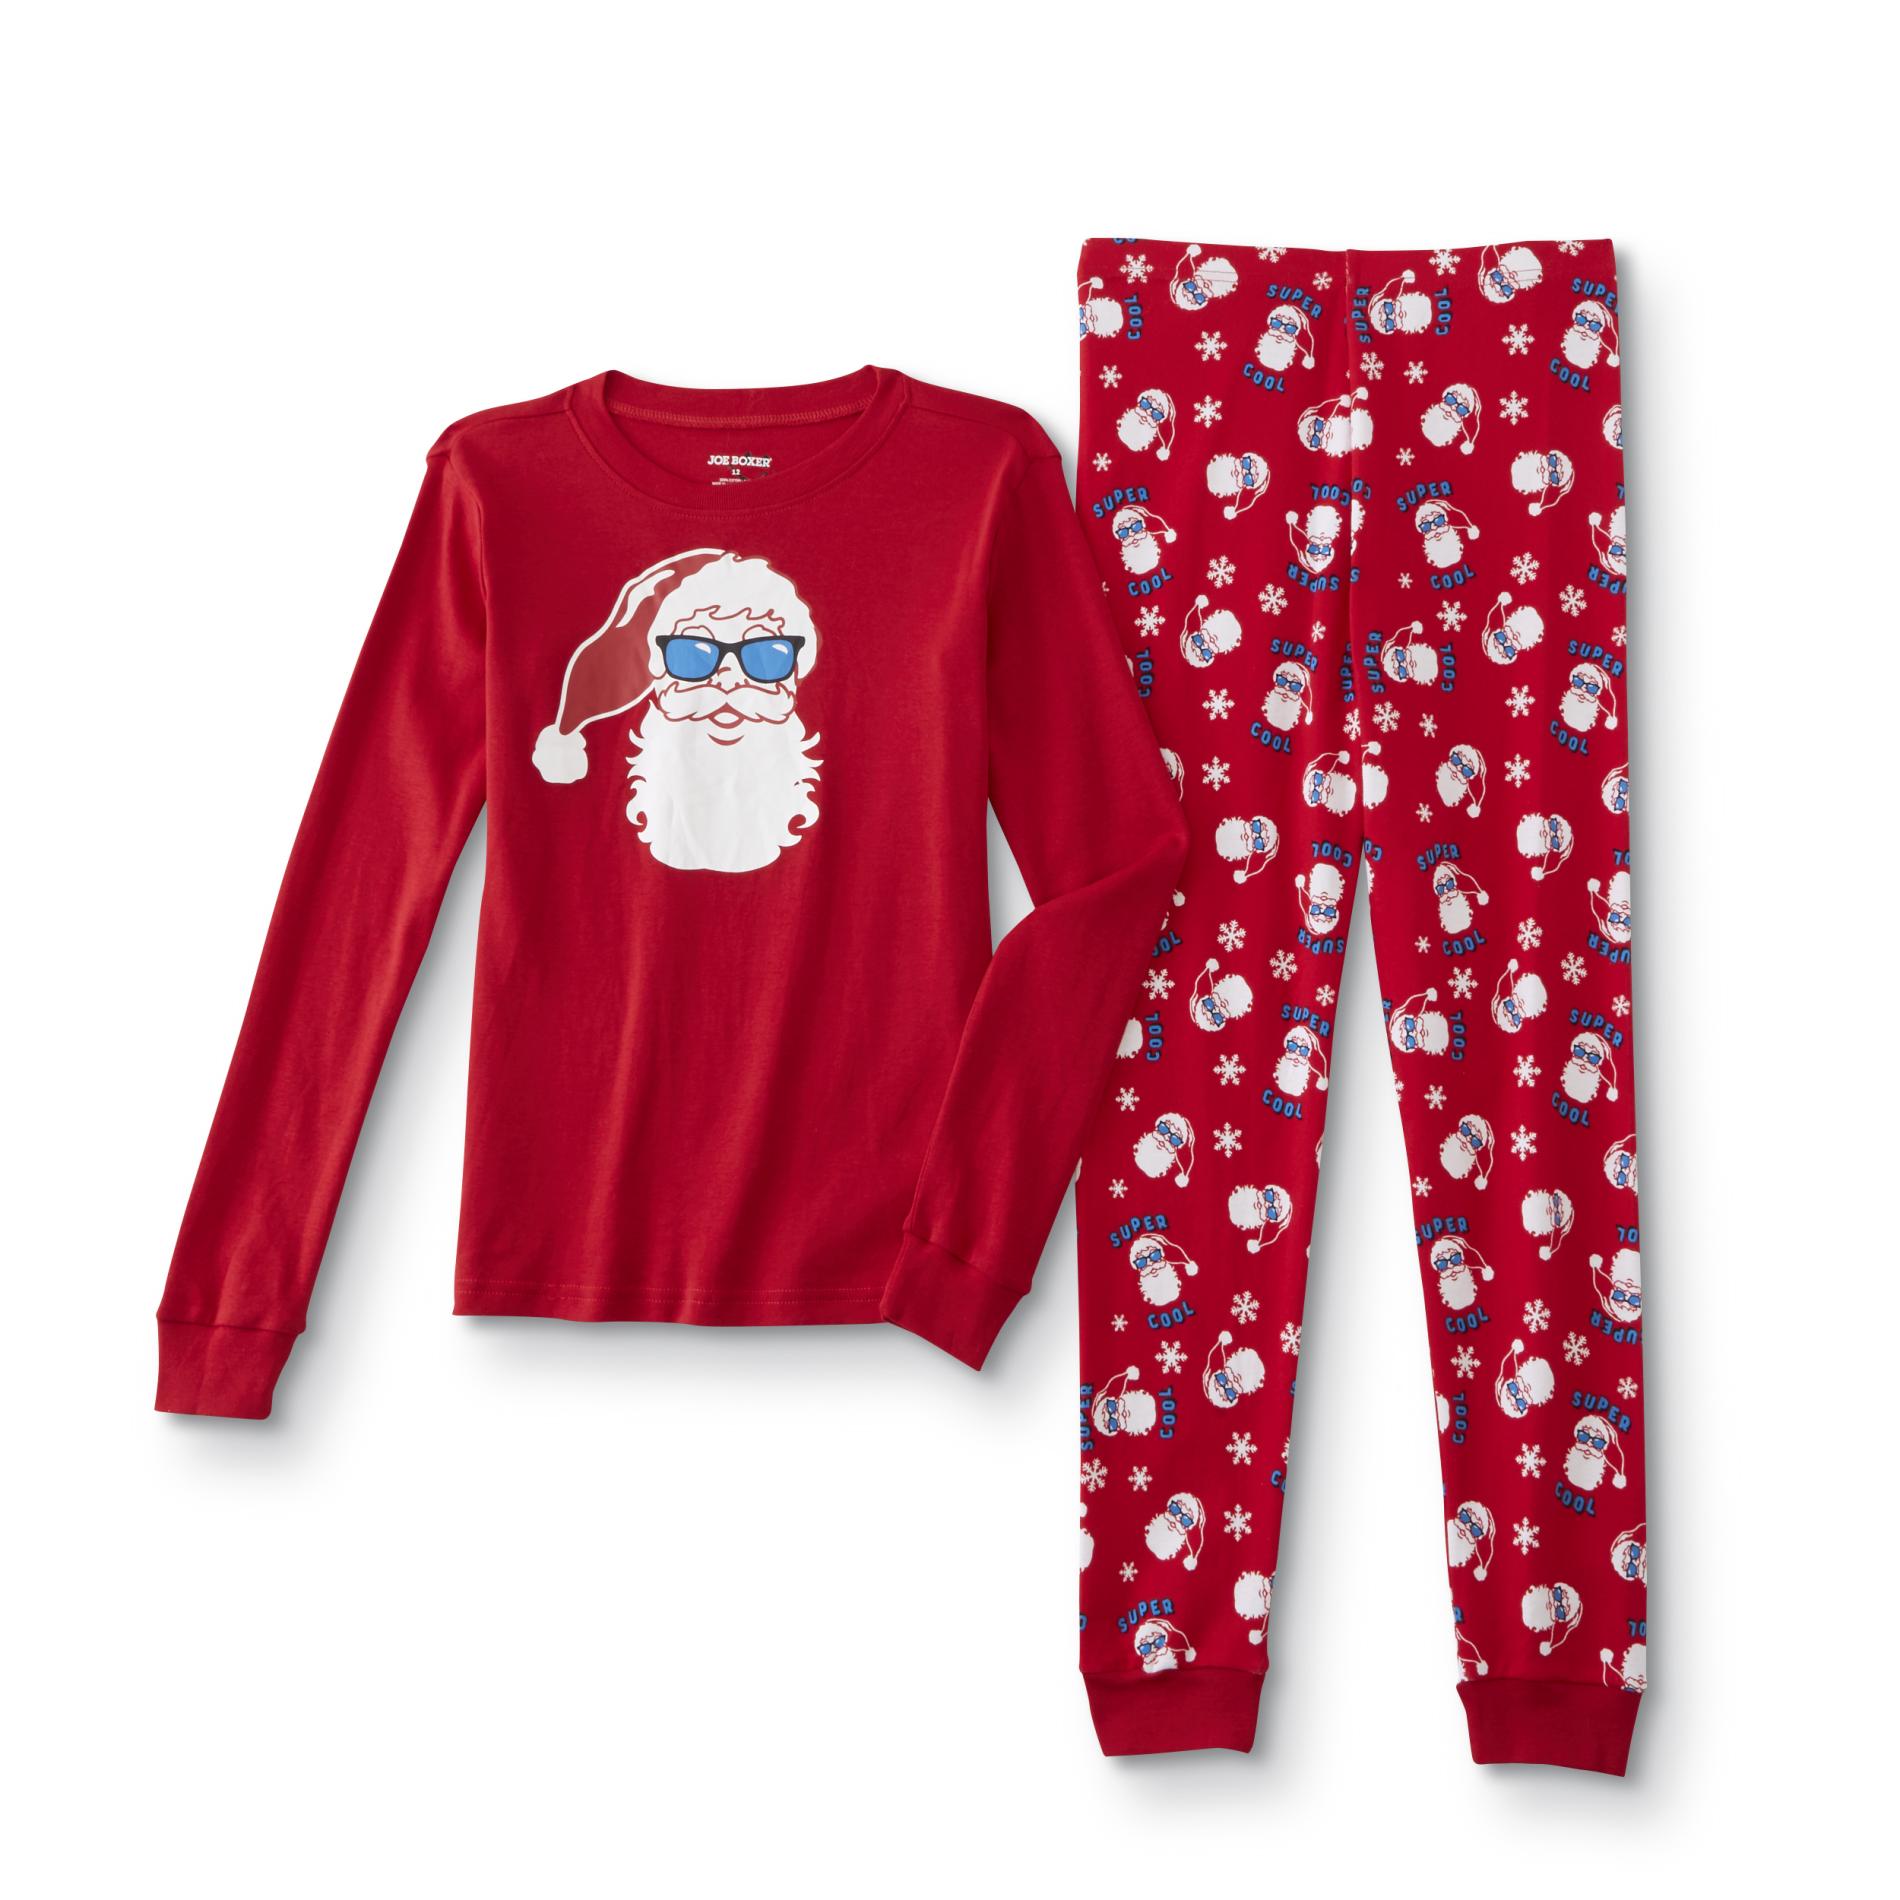 Joe Boxer Boys' Christmas Pajama Shirt & Pants - Super Cool Santa